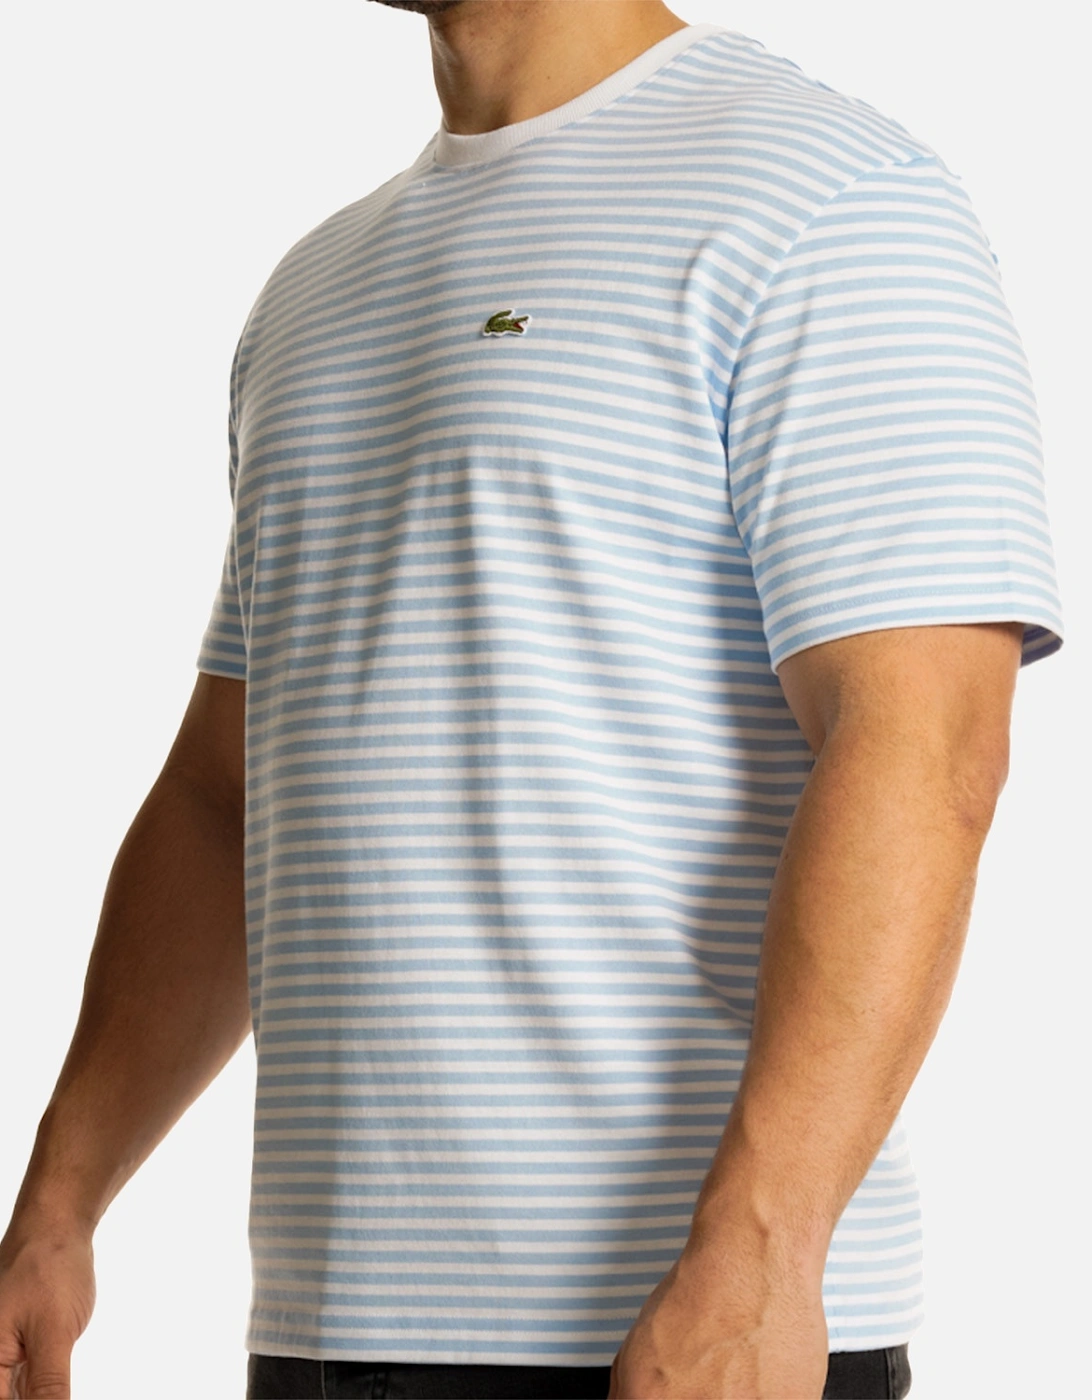 Mens Stripe T-Shirt (White/Blue)